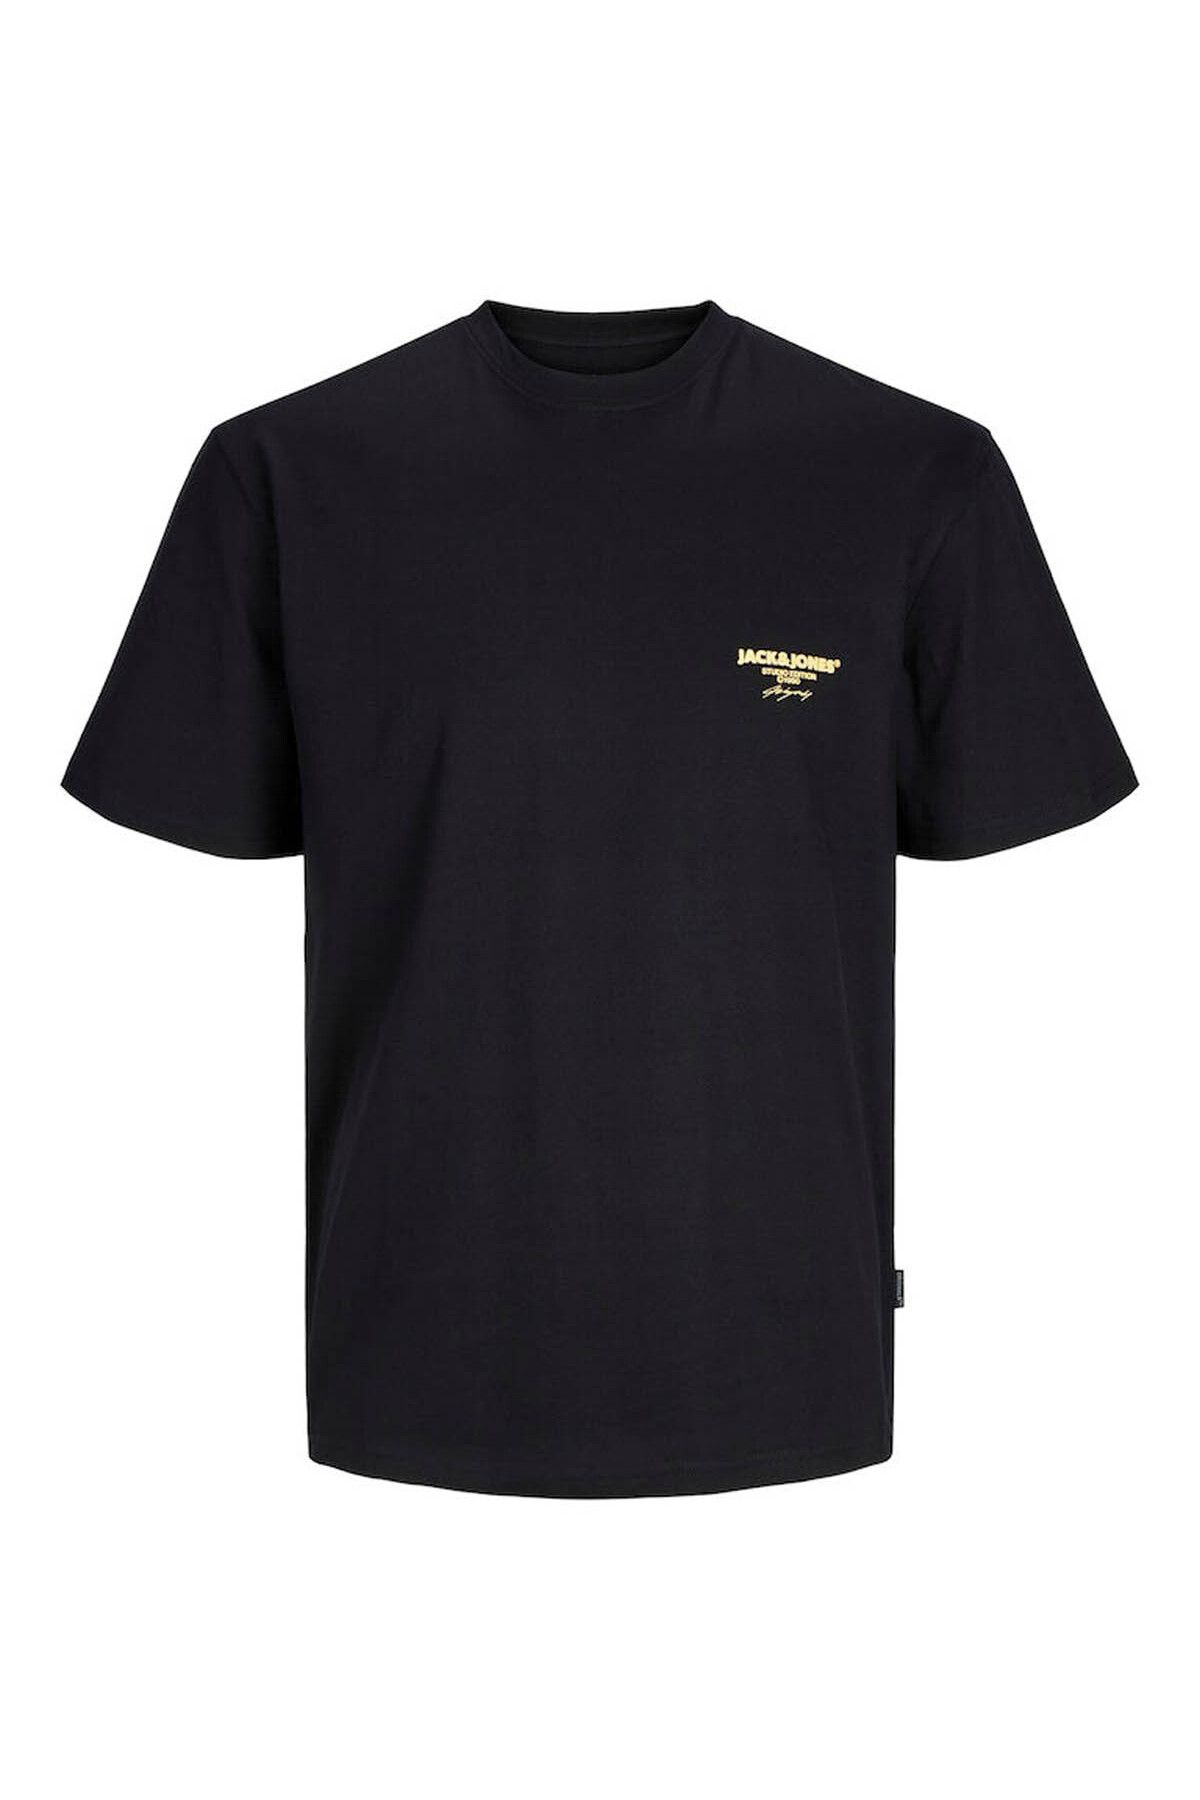 Jack & Jones Erkek T-shirt Siyah 12256494 Jorbora Brandıng Tee Ss Crew Neck Blk